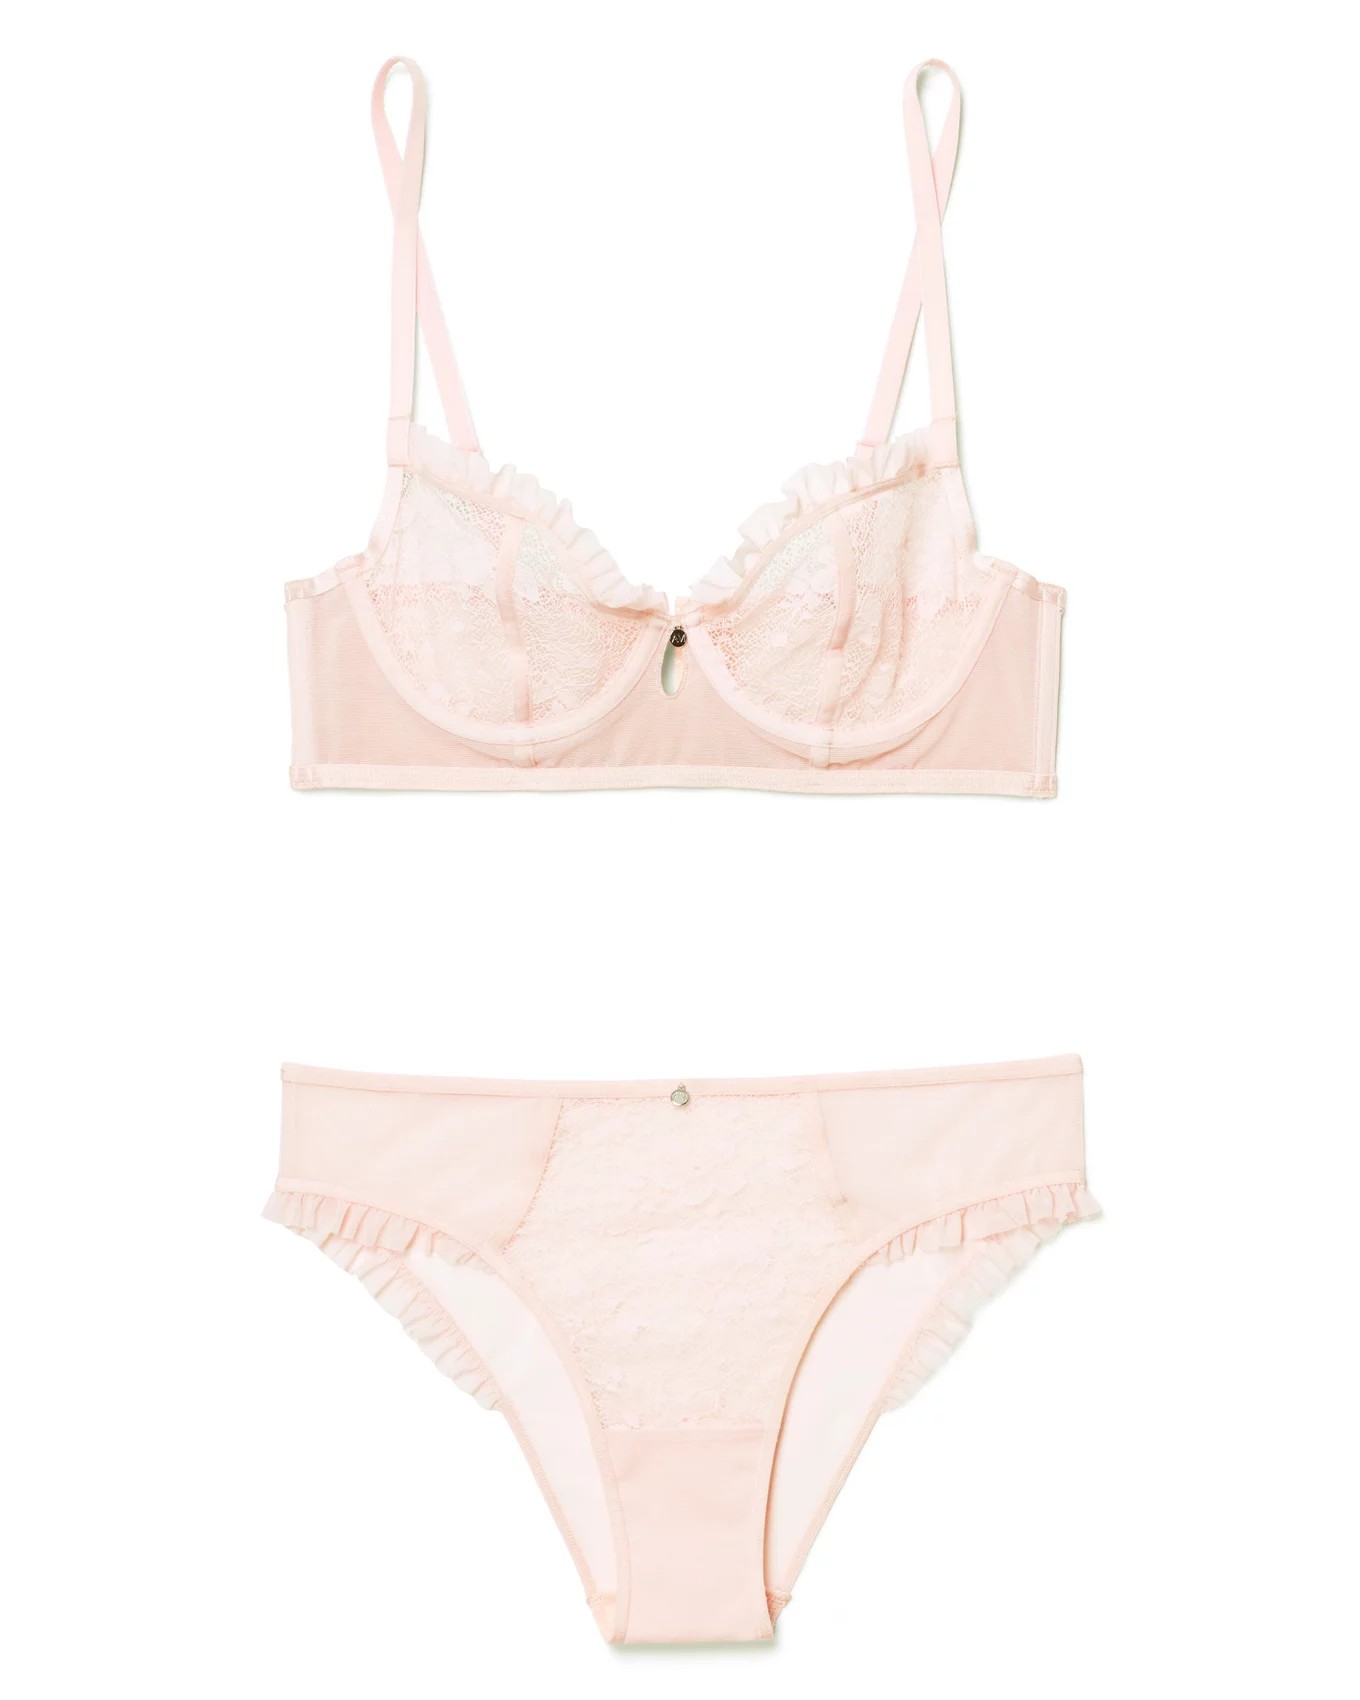 VS luxe lingerie unlined mesh balconet bra new size 36D demure pink